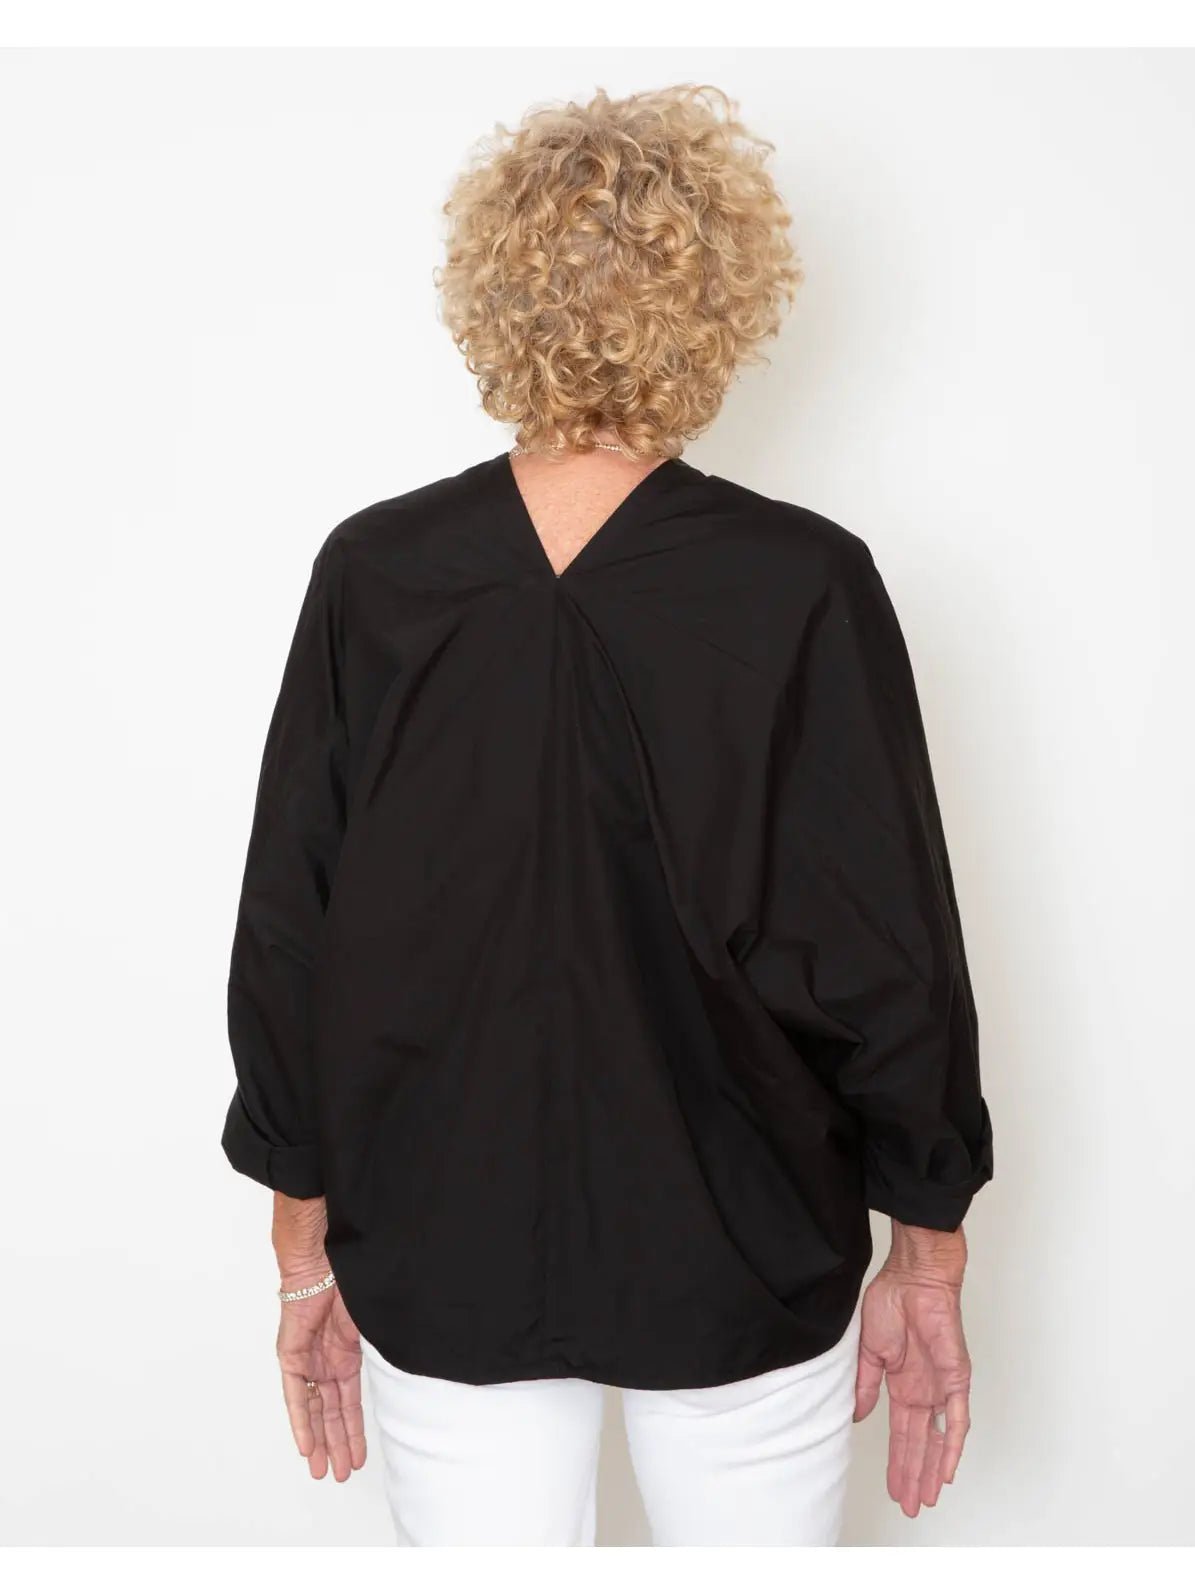 Wrapper Top- Black Poplin (One Size)Good CompanyShirt